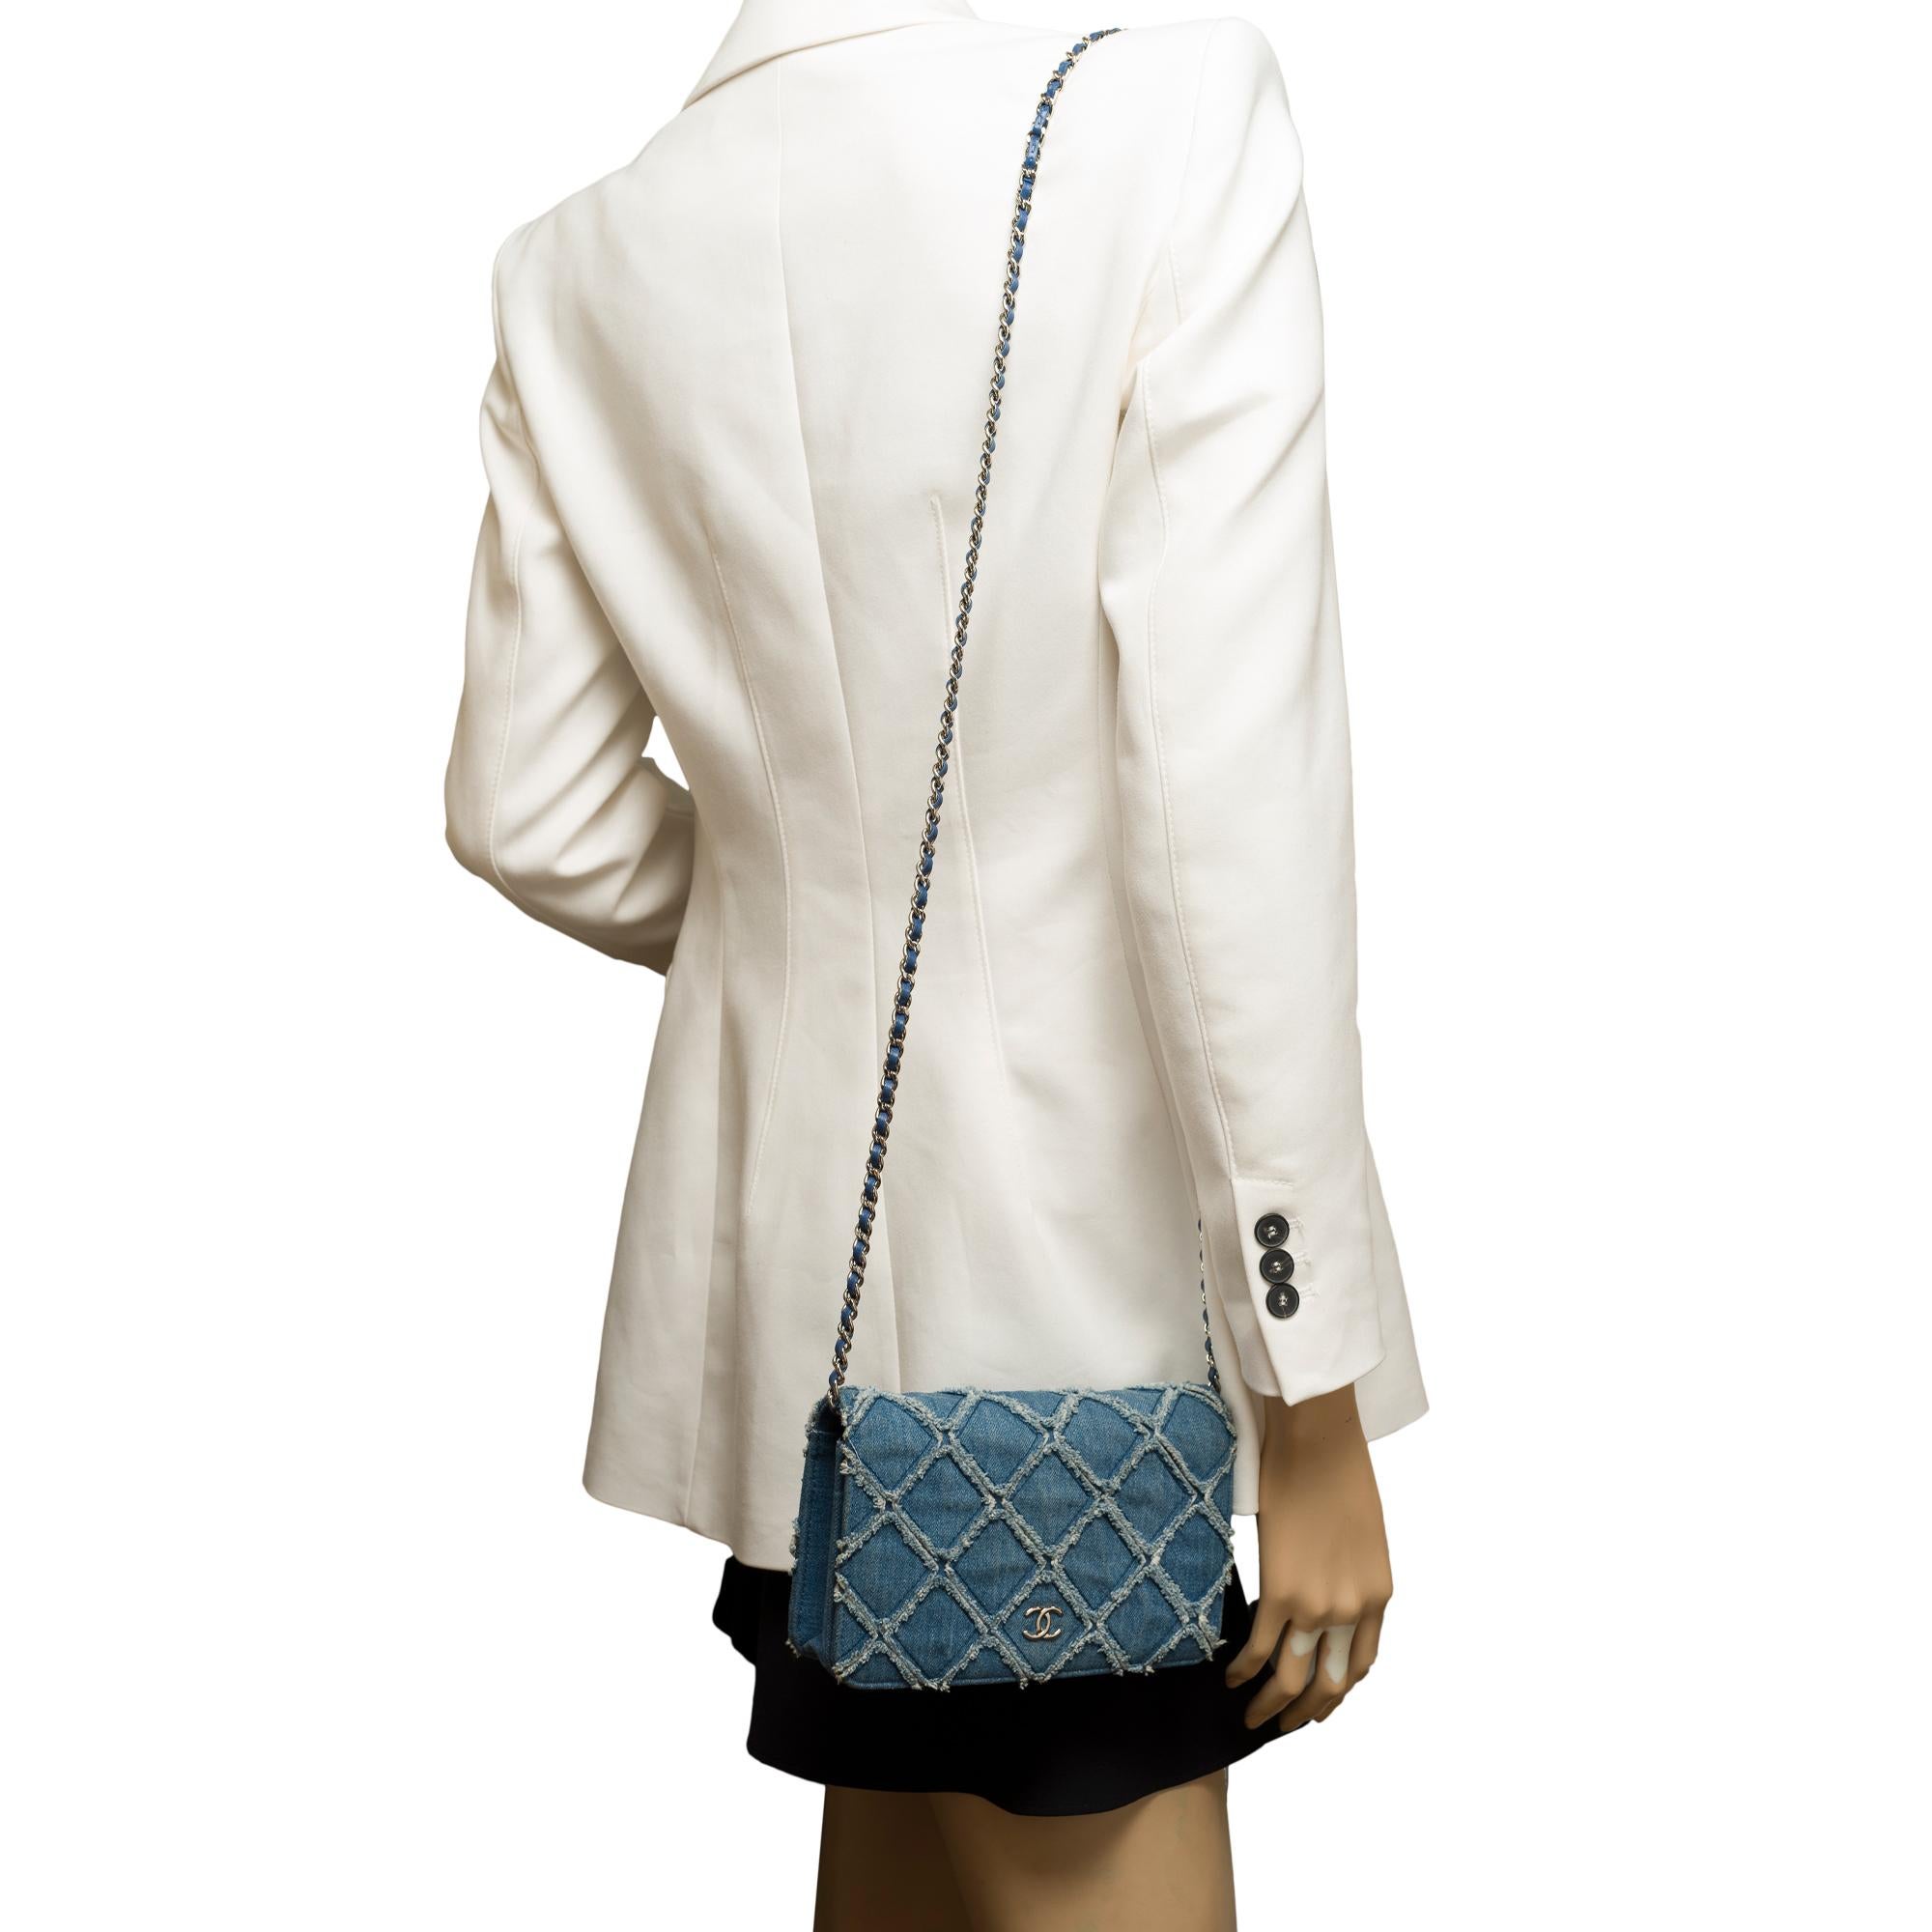 Rare & Amazing Chanel Wallet on Chain (WOC) shoulder bag in Blue denim, SHW 9